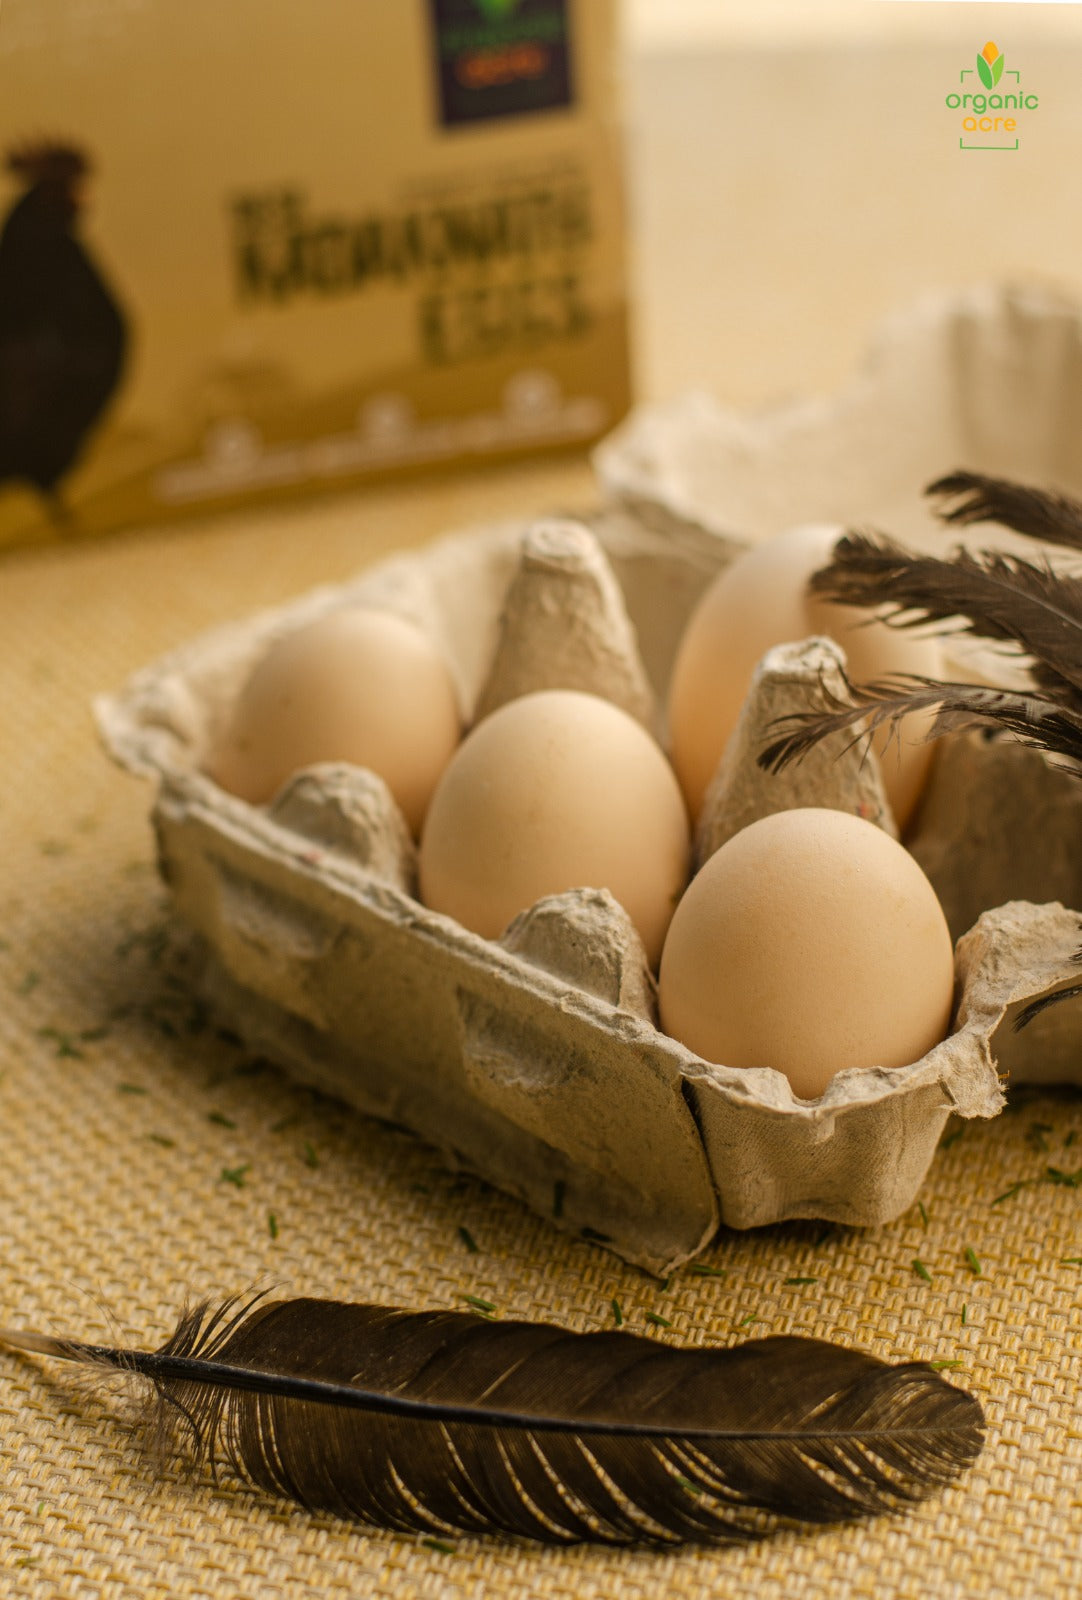 Premium Kadaknath Desi Organic Eggs (6 Eggs)